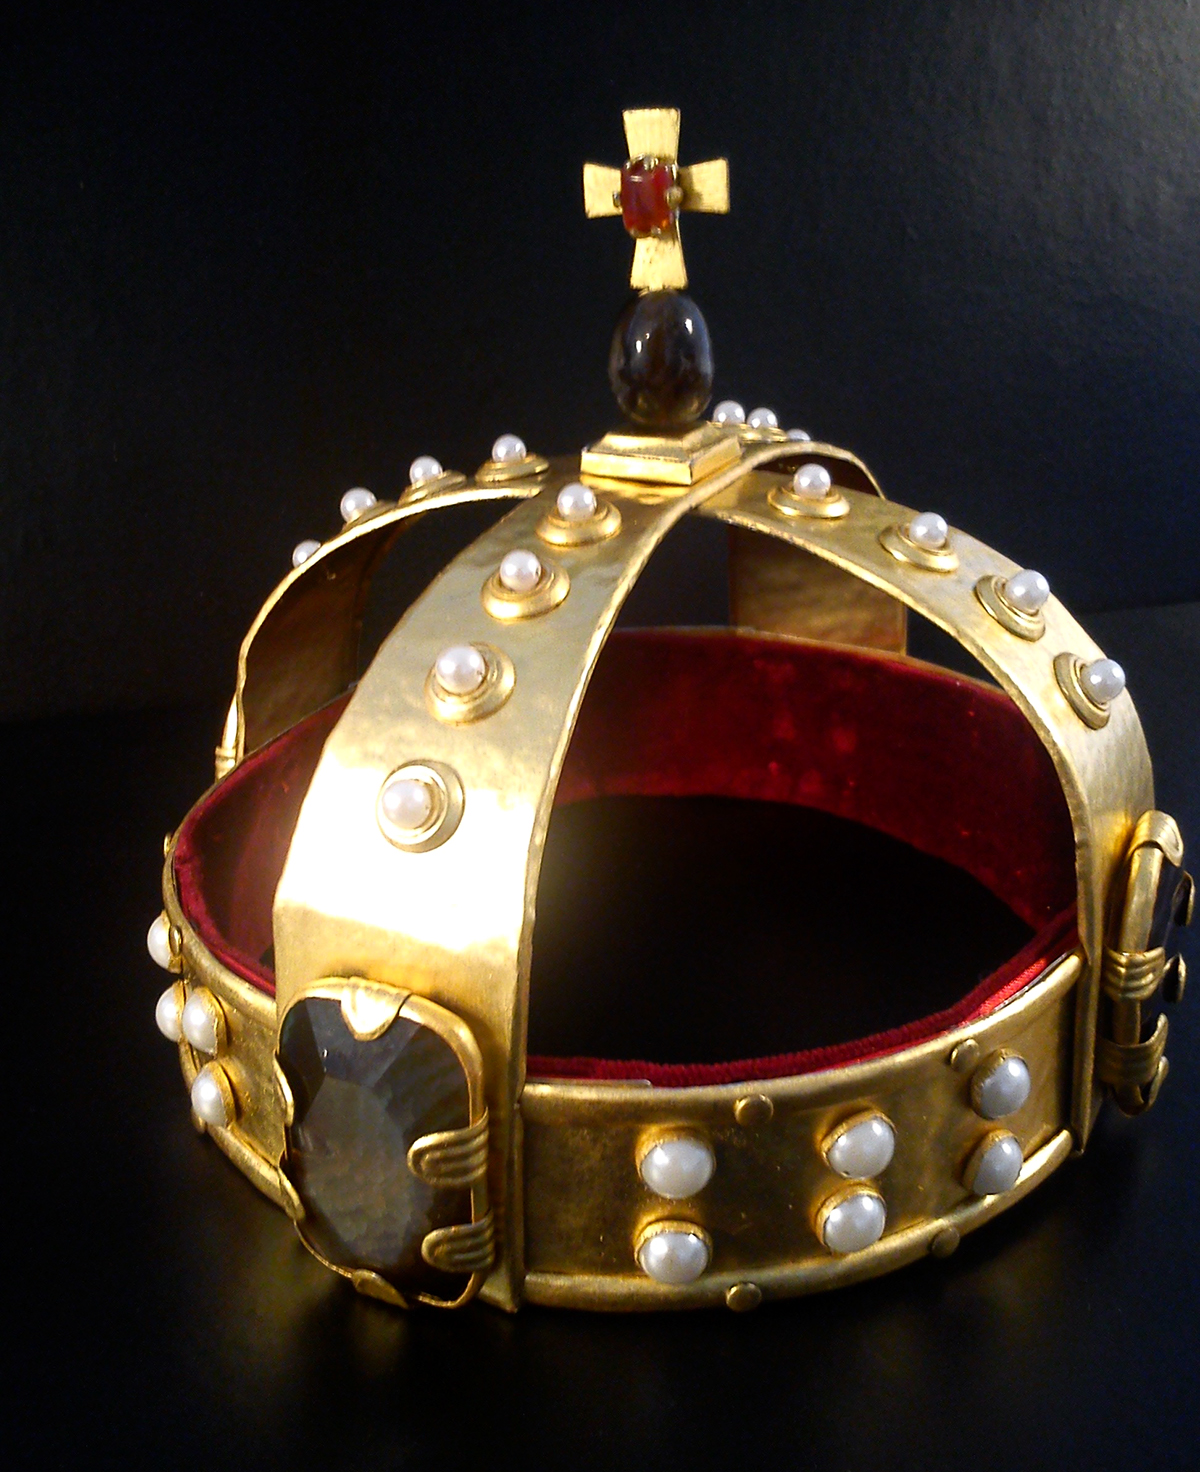 #crown #gold #king  #jewelry #replica #model  #wax figure #costume